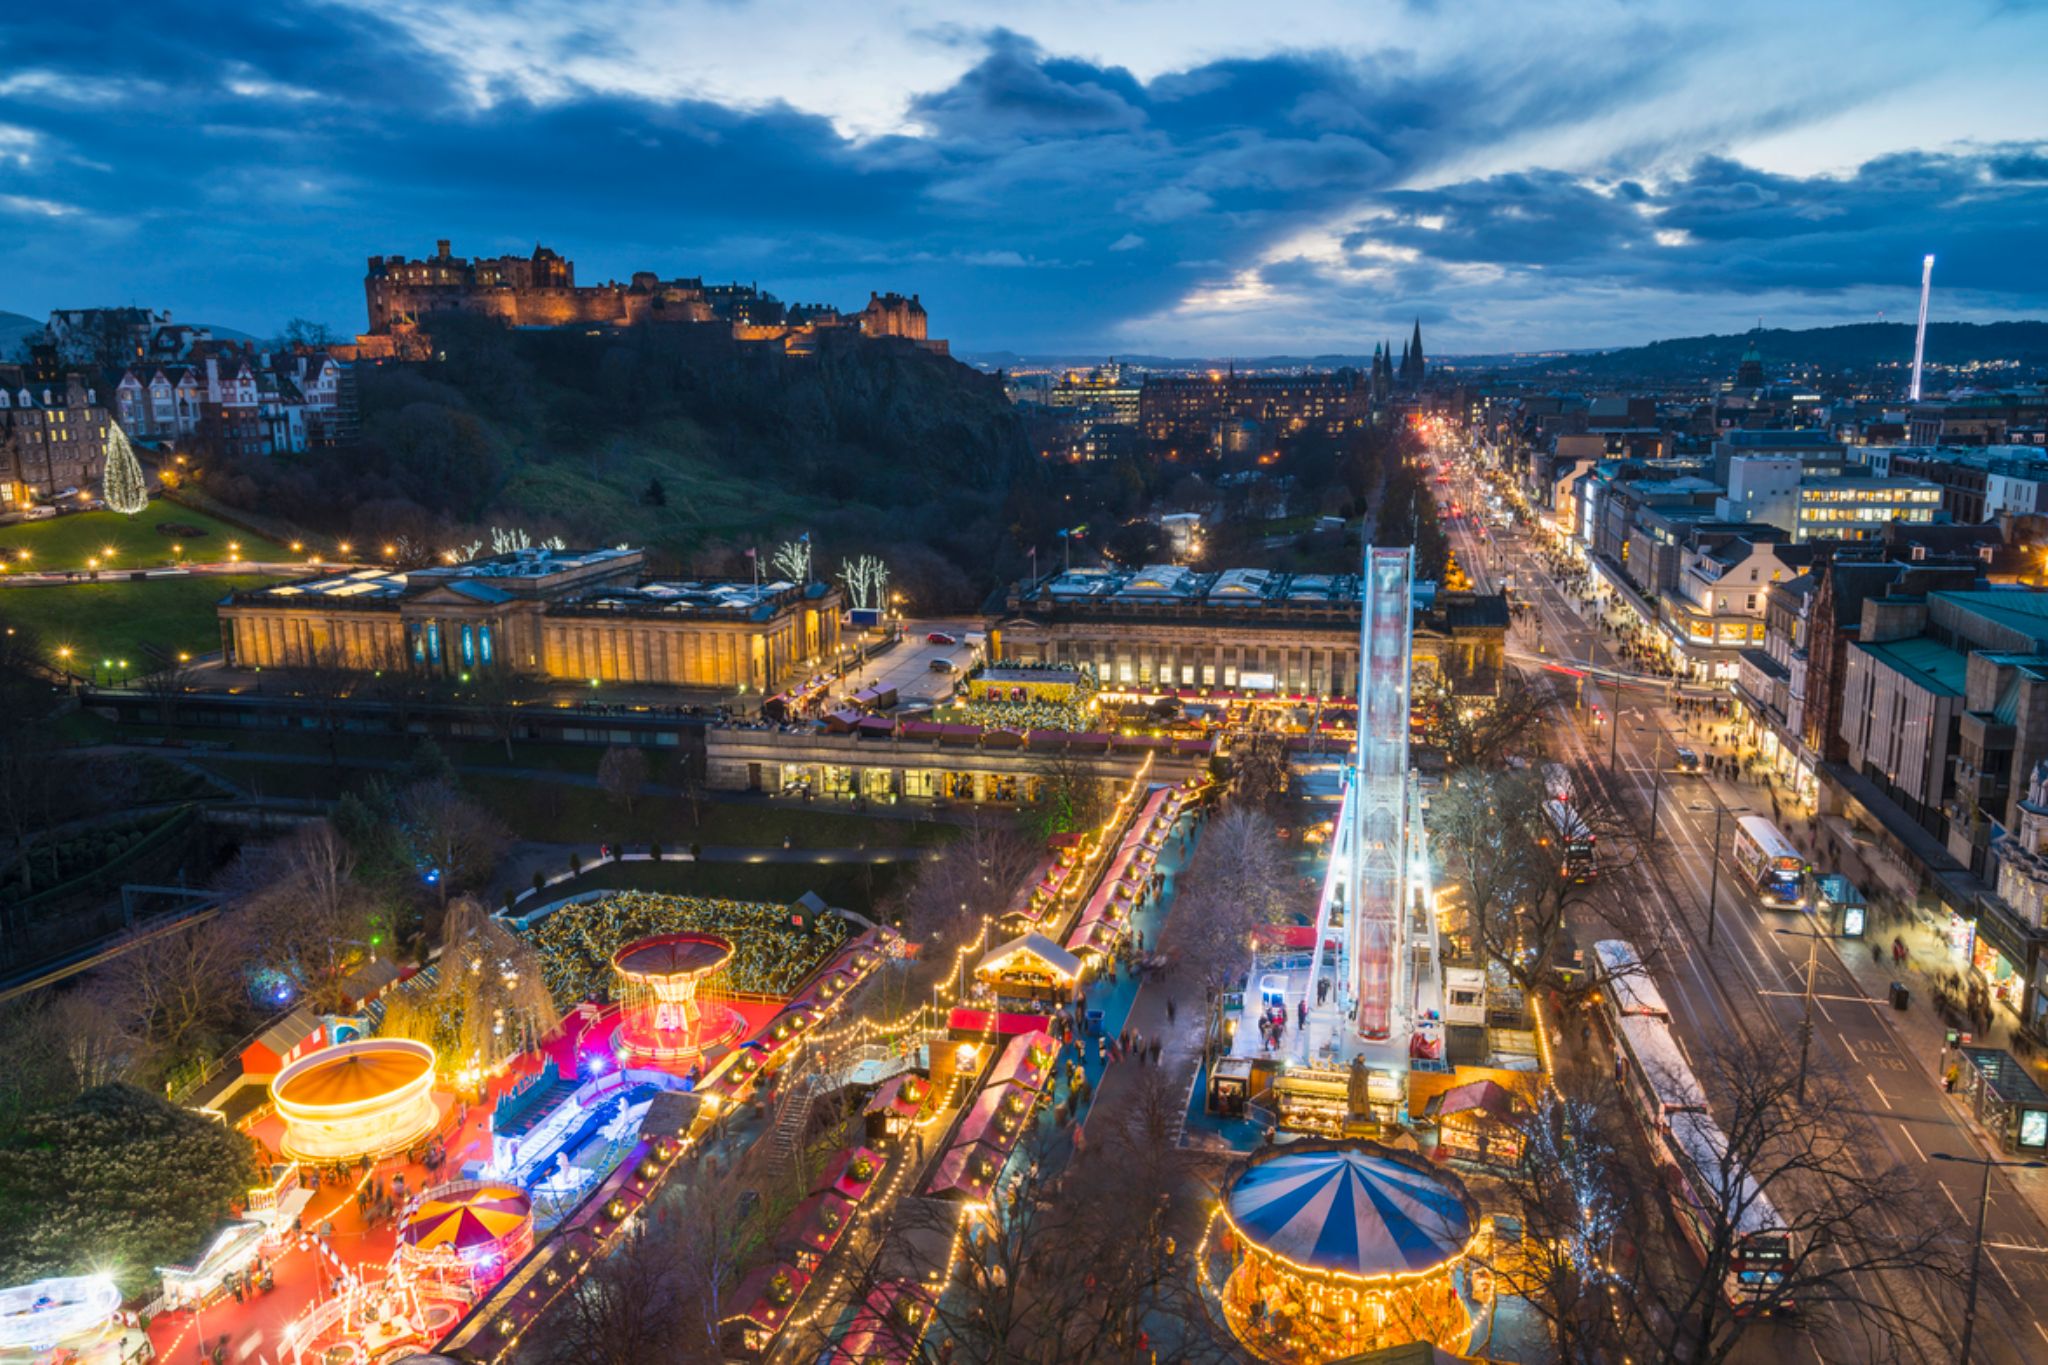 Edinburgh Castle and Edinburgh's Christmas Market from the Scott Monument.